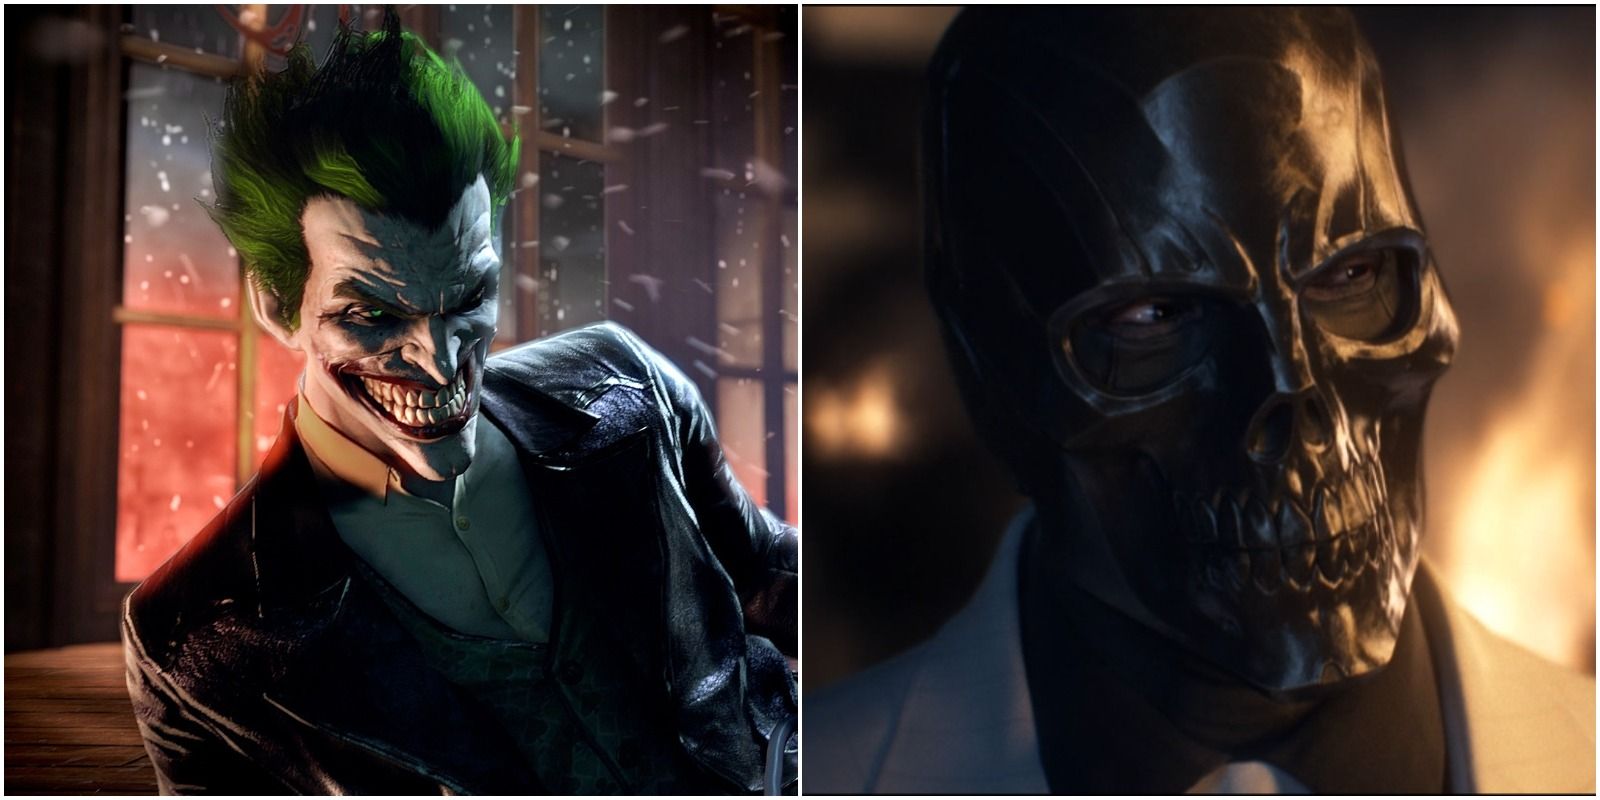 Joker and Black Mask as two of Arkham Origins' main villains